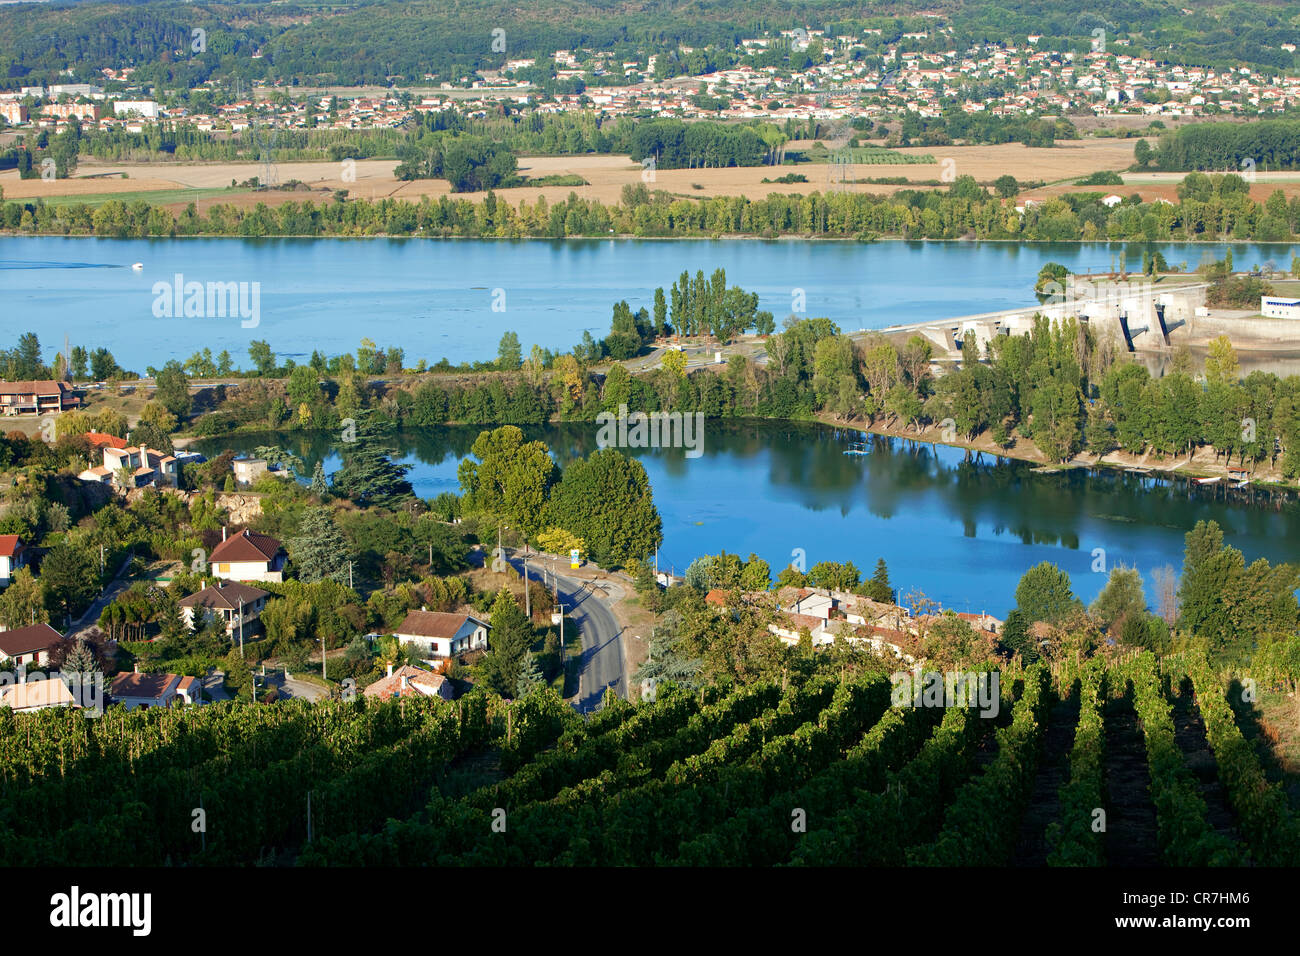 France, Loire, Saint Pierre de Boeuf, artificial lake and dam on the Rhone river, Condrieu designation vineyard Stock Photo